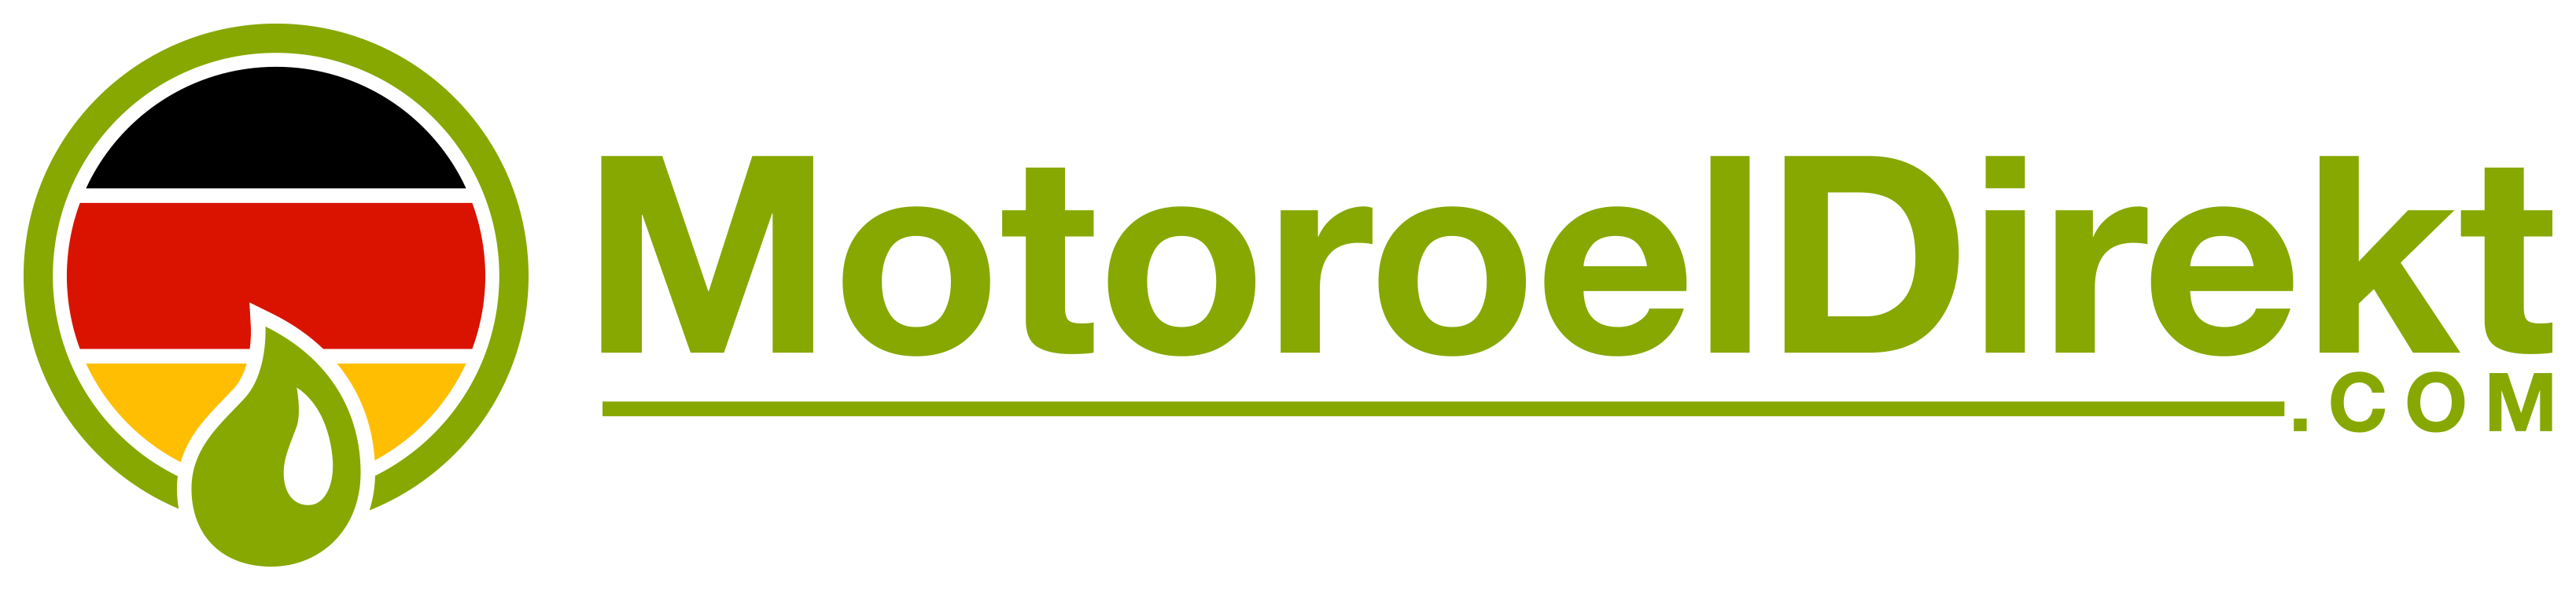 Motoroeldirekt.com Logo